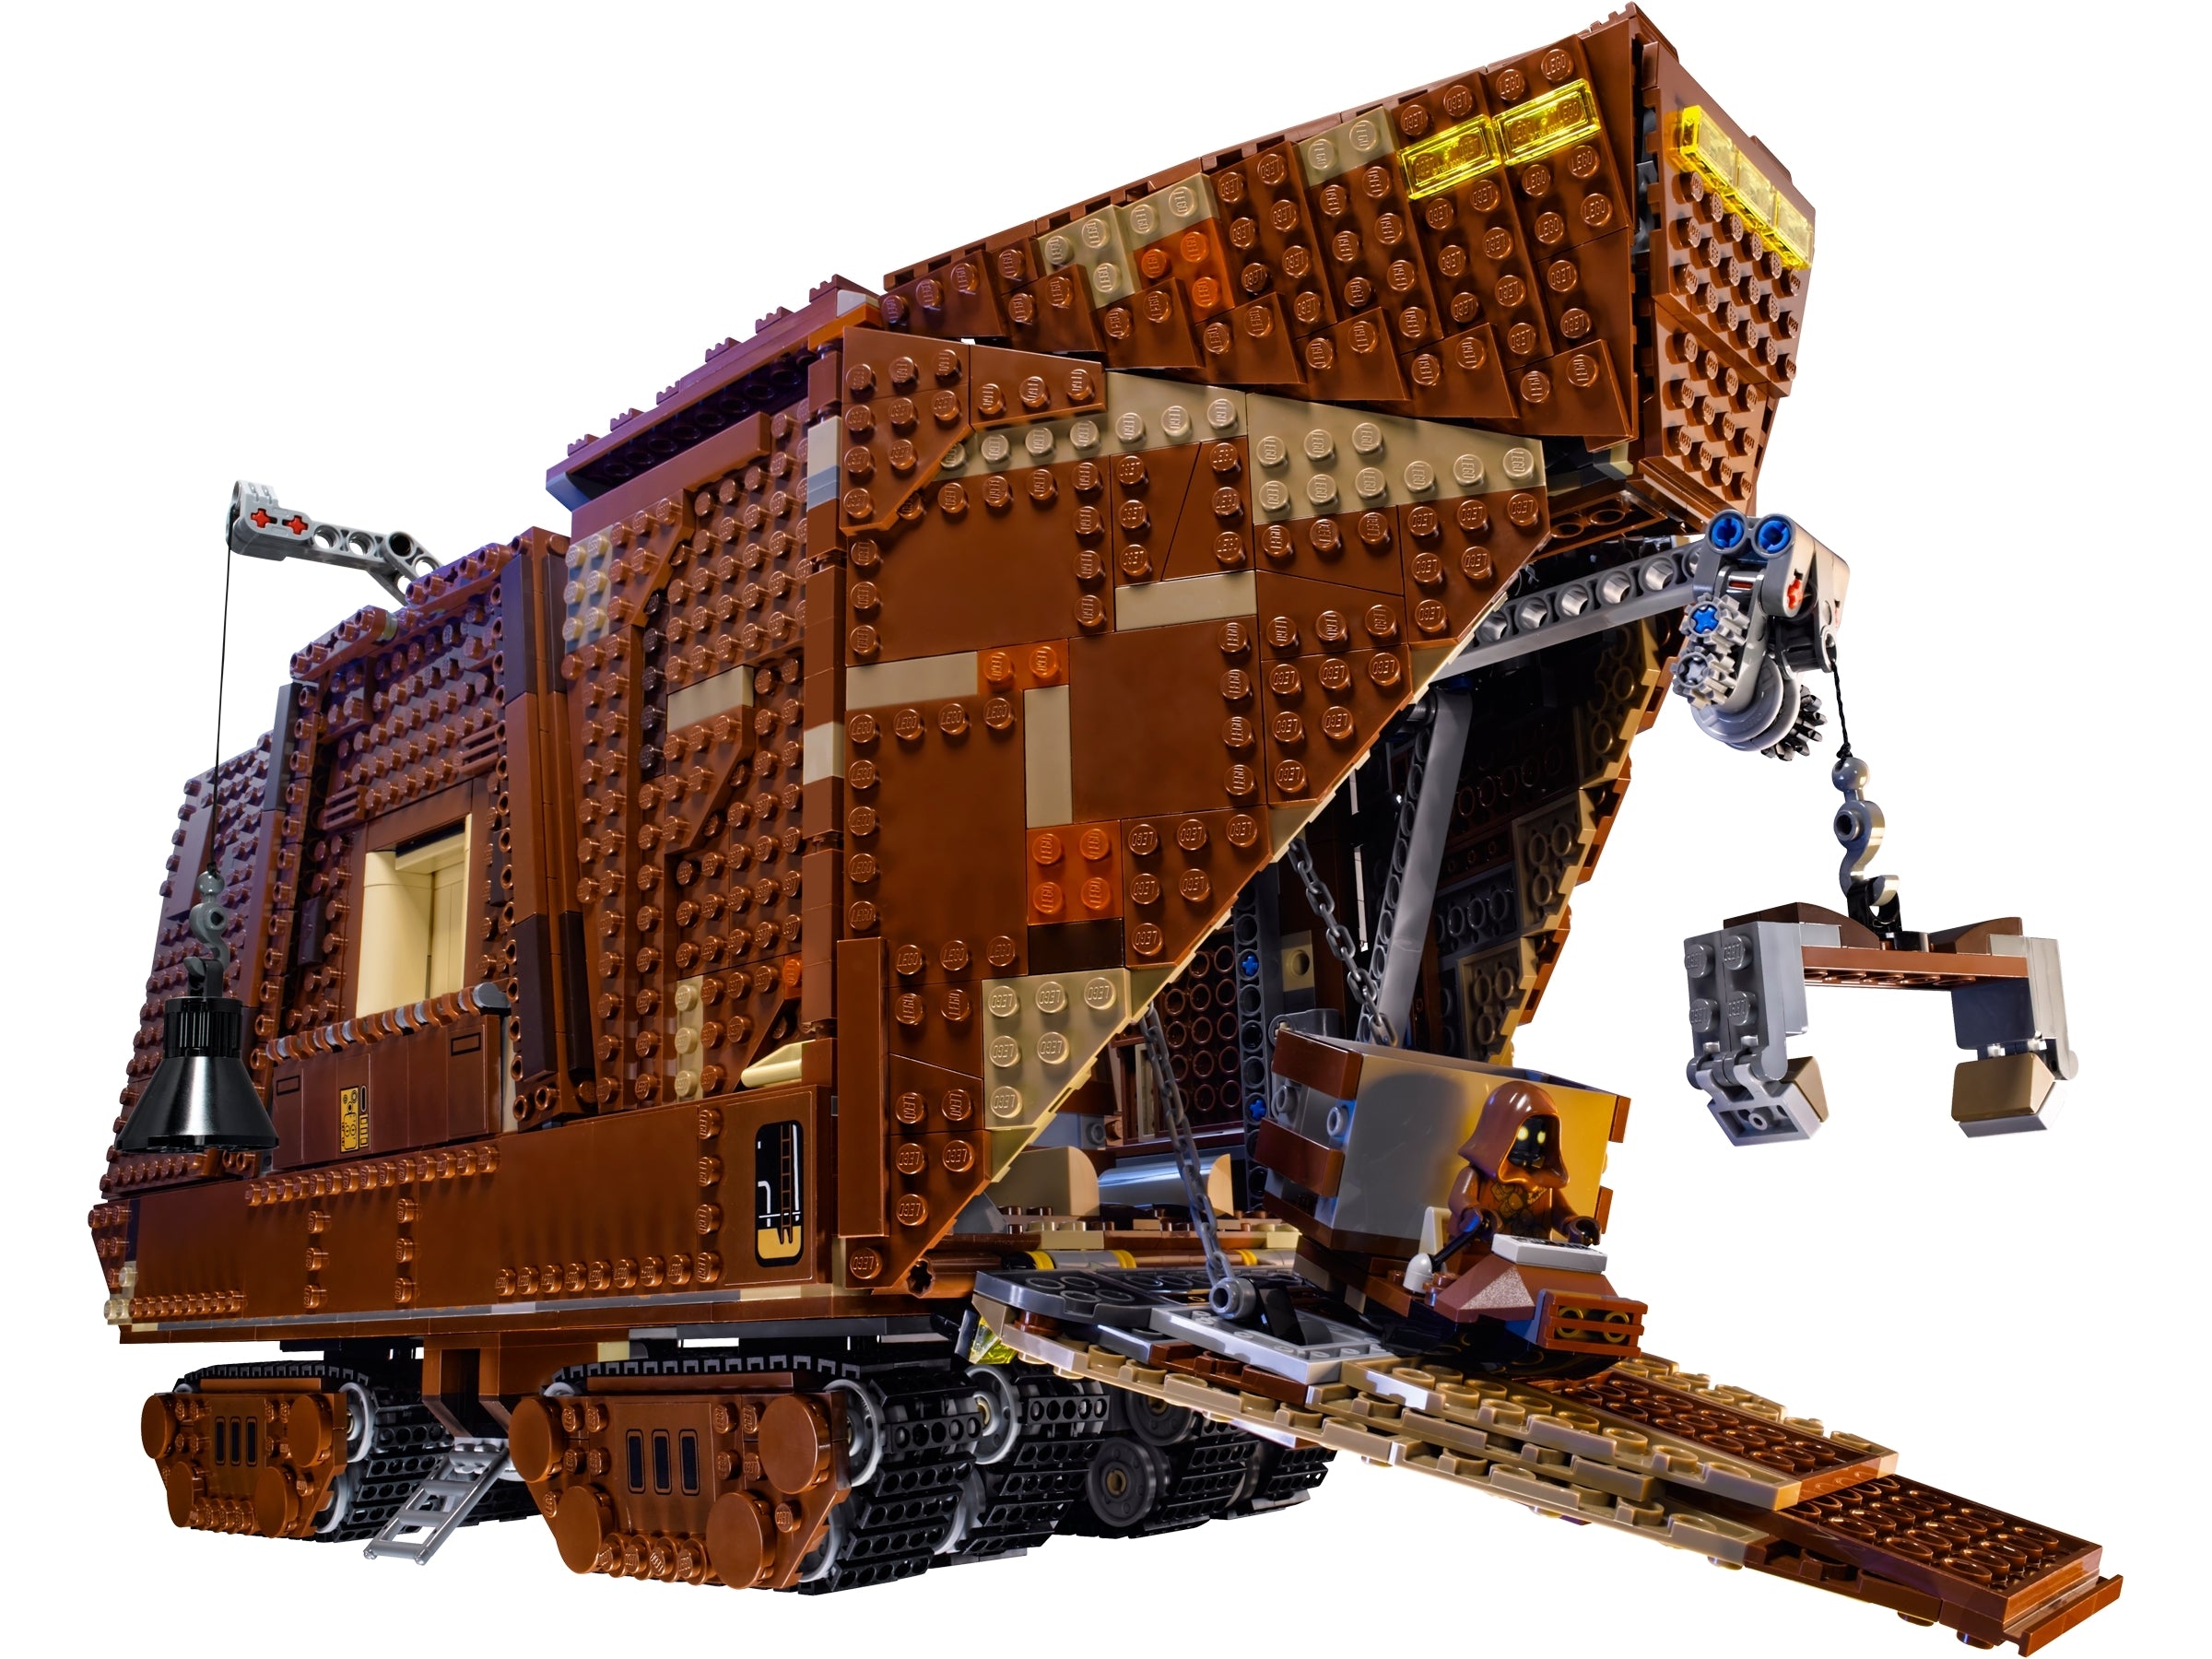 LEGO Star Wars: UCS Sandcrawler 75059 (Retired)